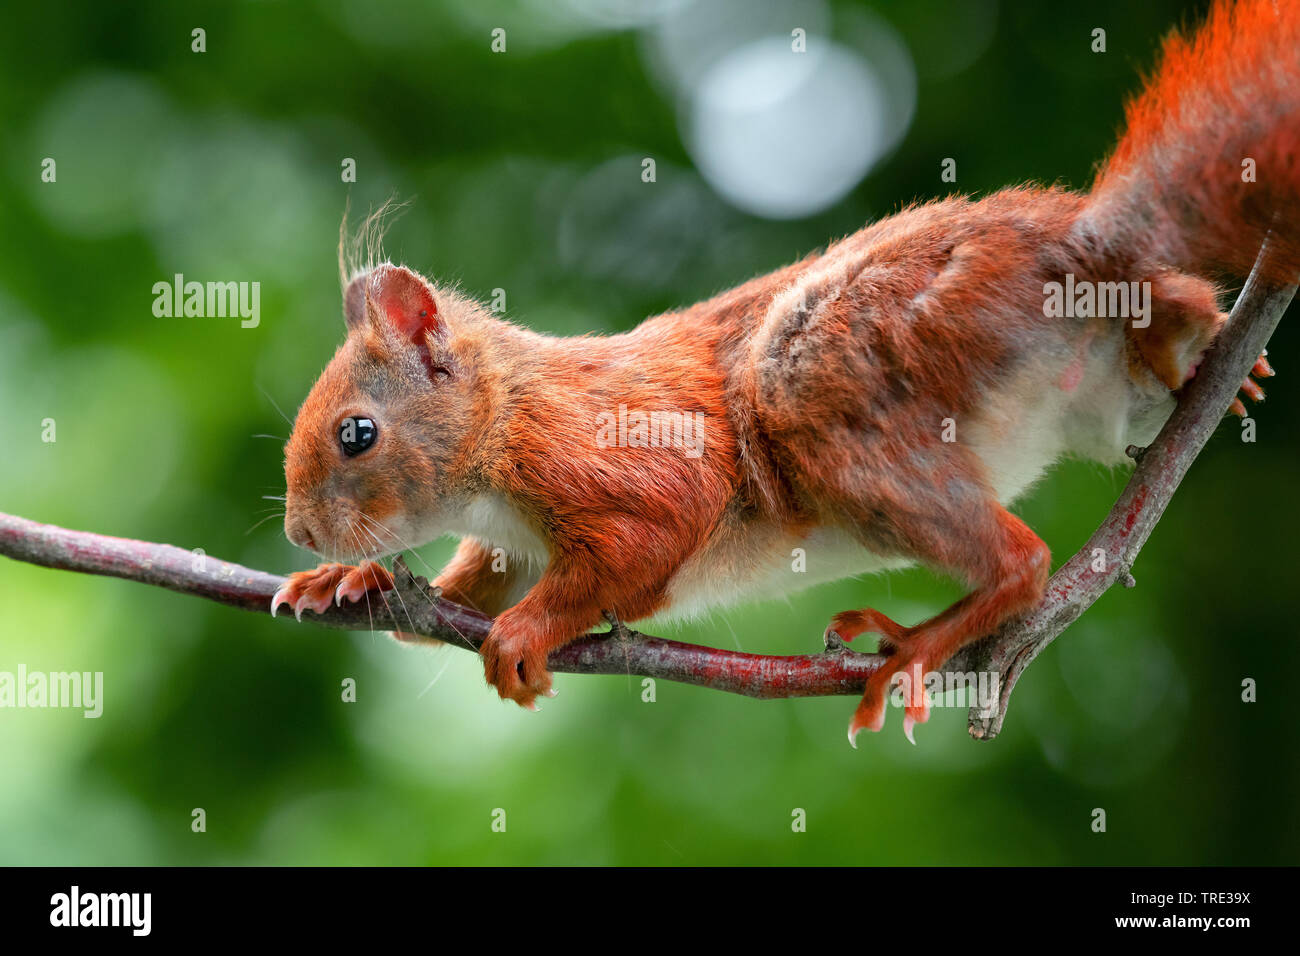 European red squirrel, Eurasian red squirrel (Sciurus vulgaris), climbing on a twig, side view, Germany, North Rhine-Westphalia Stock Photo